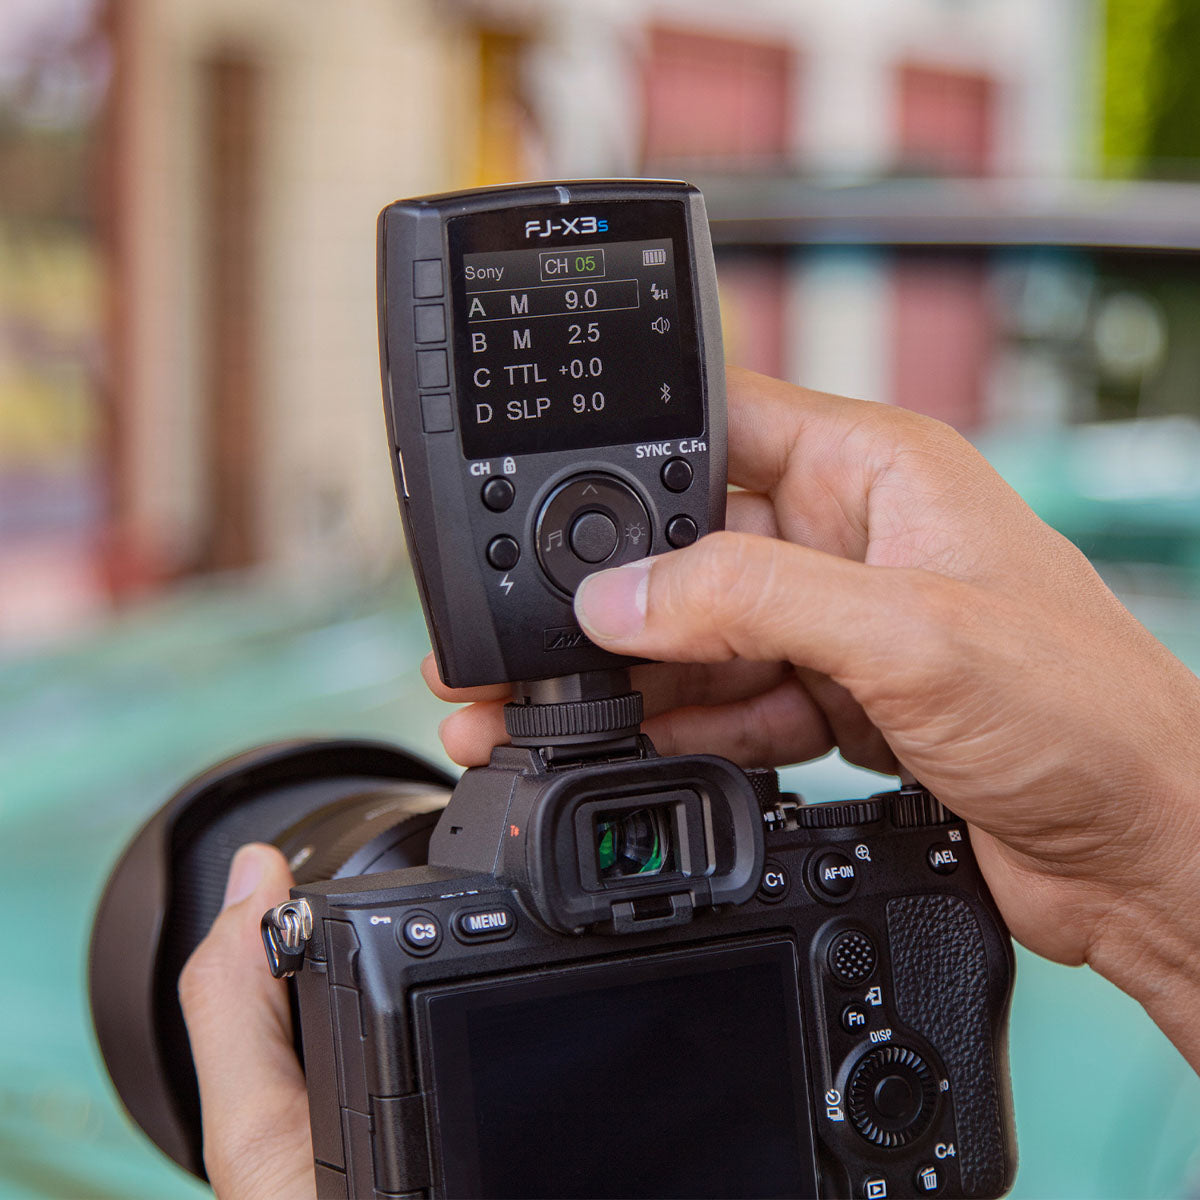 Photographer using the Westcott FJ-X3 trigger on a camera